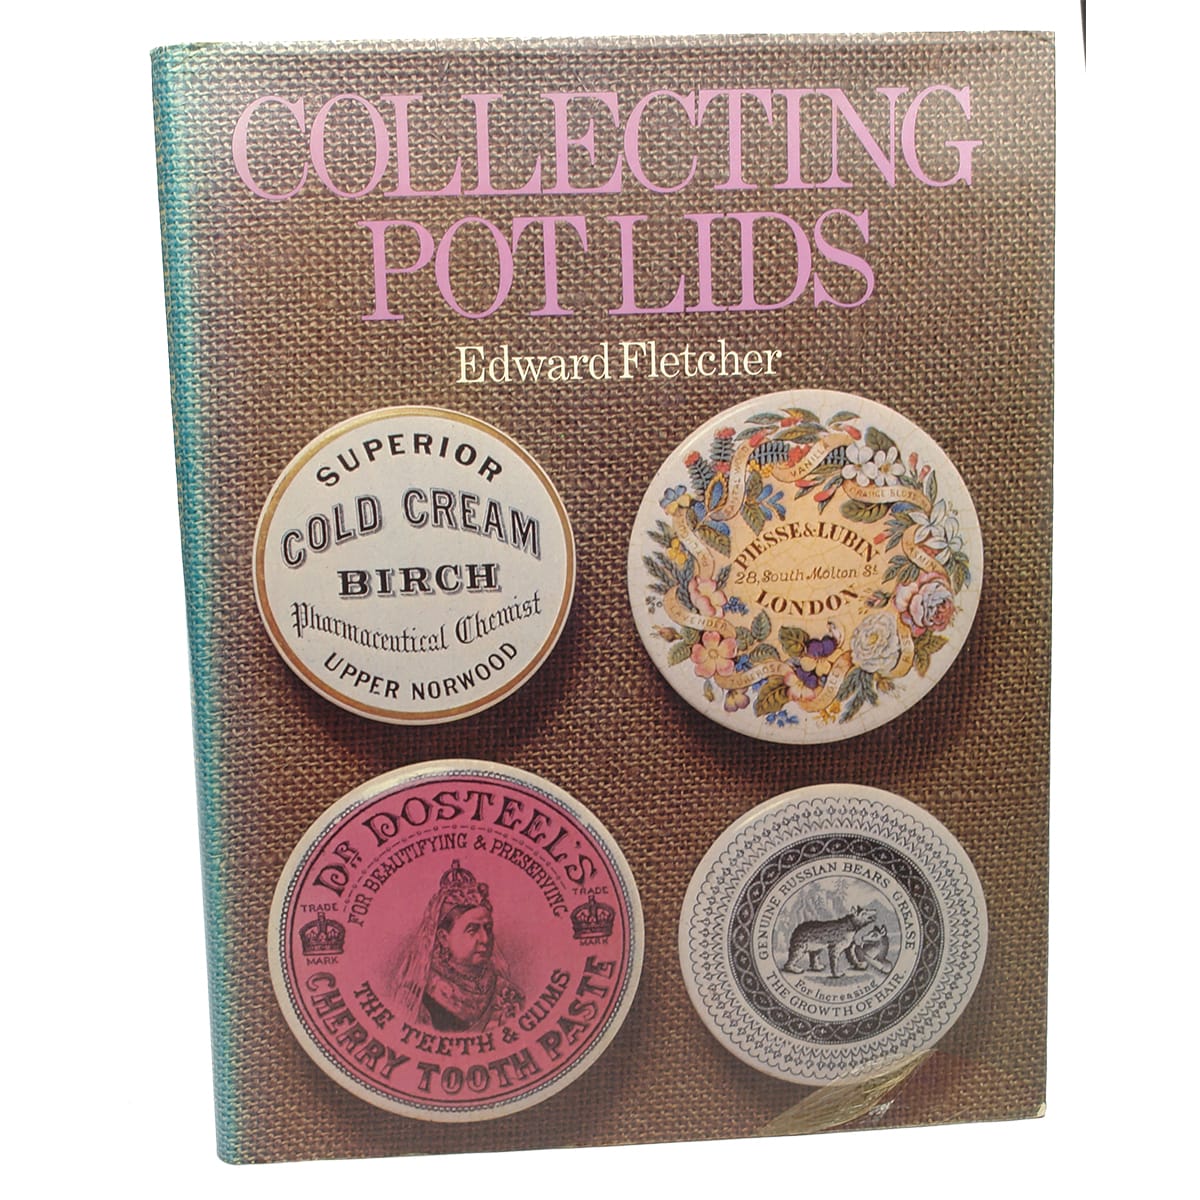 Book. Collecting Pot Lids, Edward Fletcher. 1975.